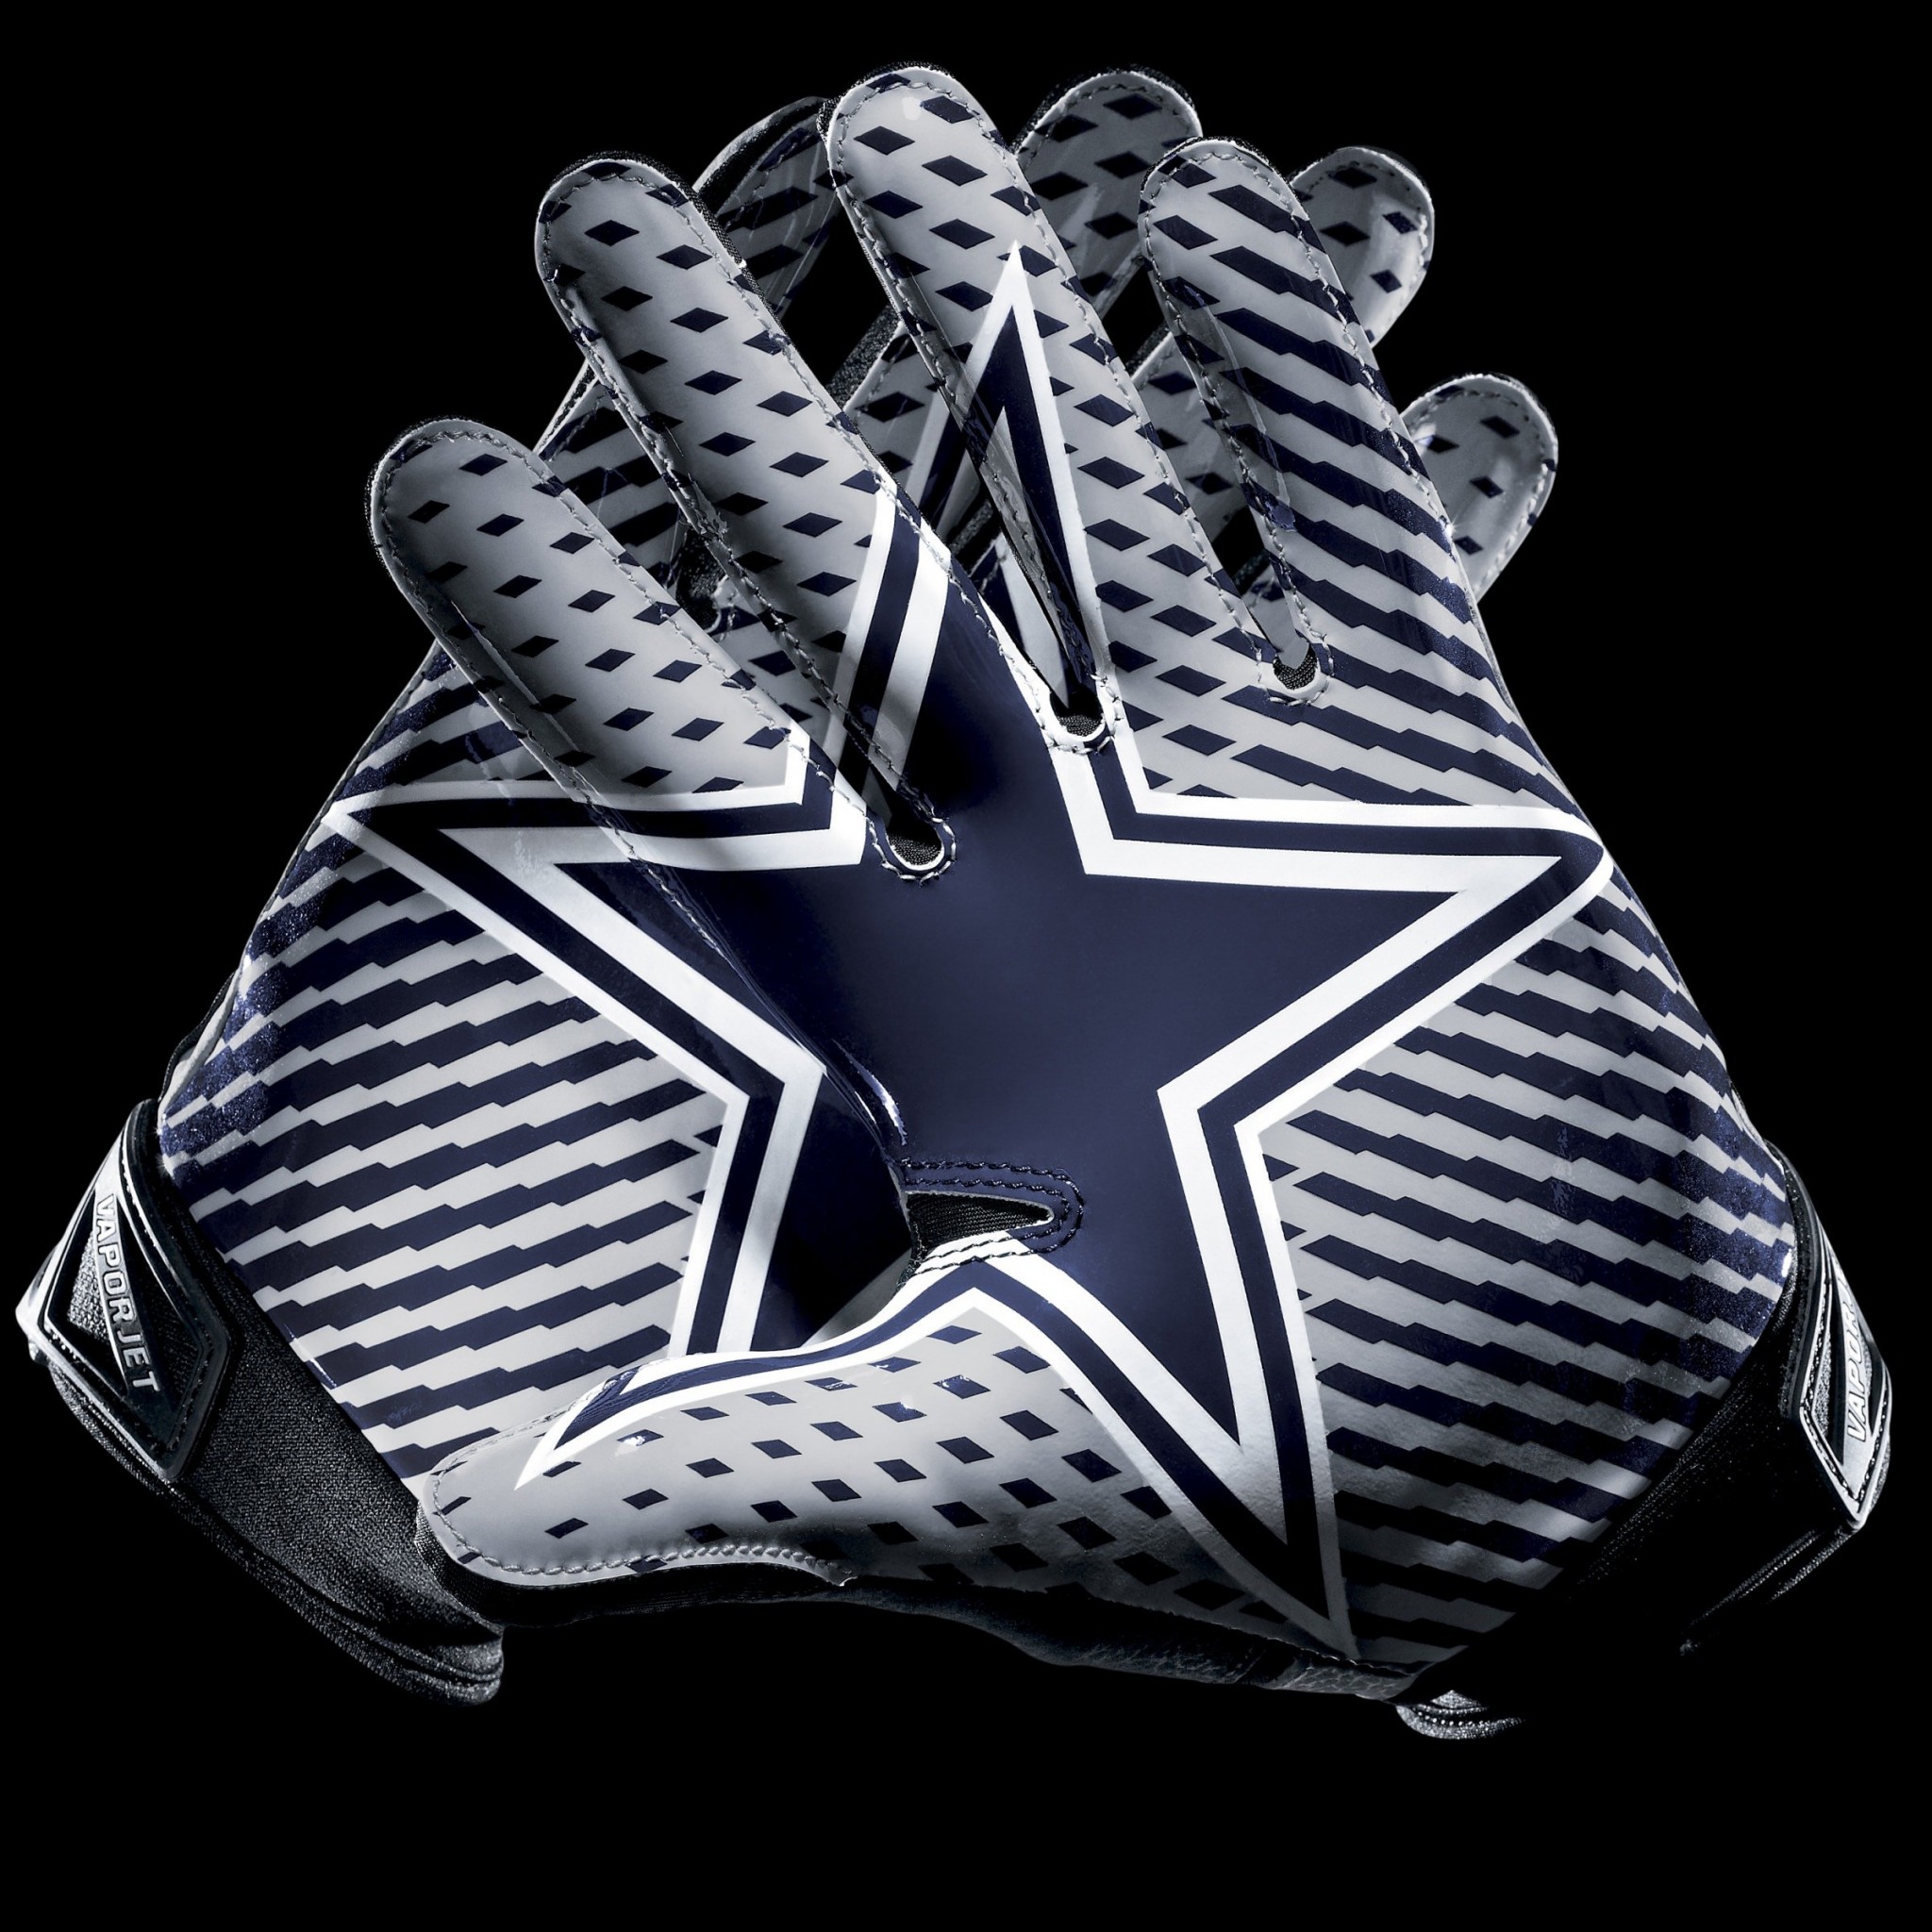 Dallas Cowboys Gloves Wallpaper for Google Nexus 9